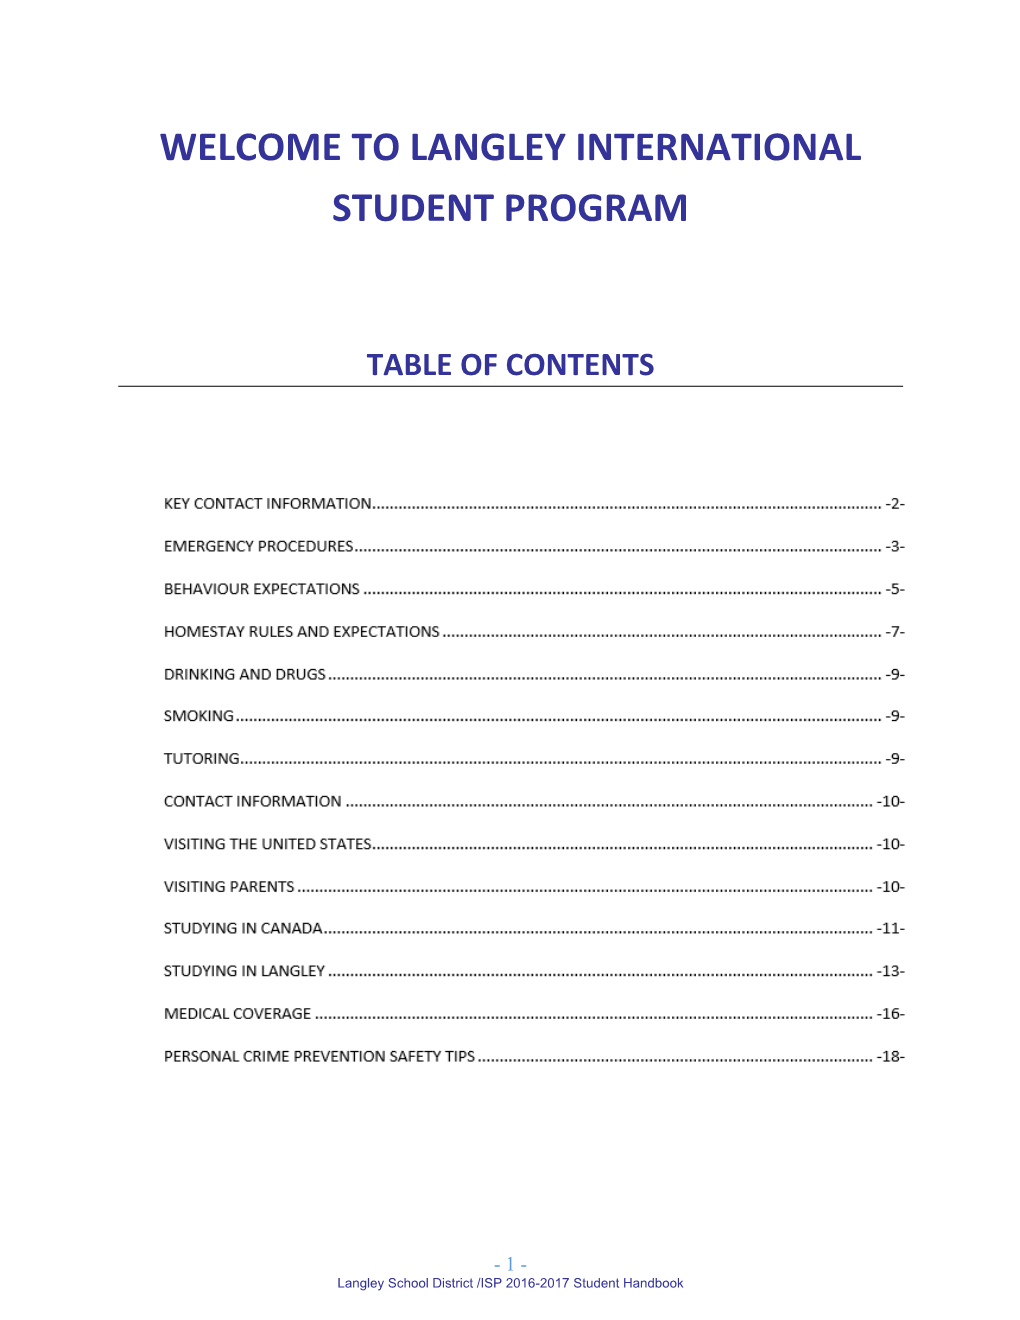 Langley International Student Program